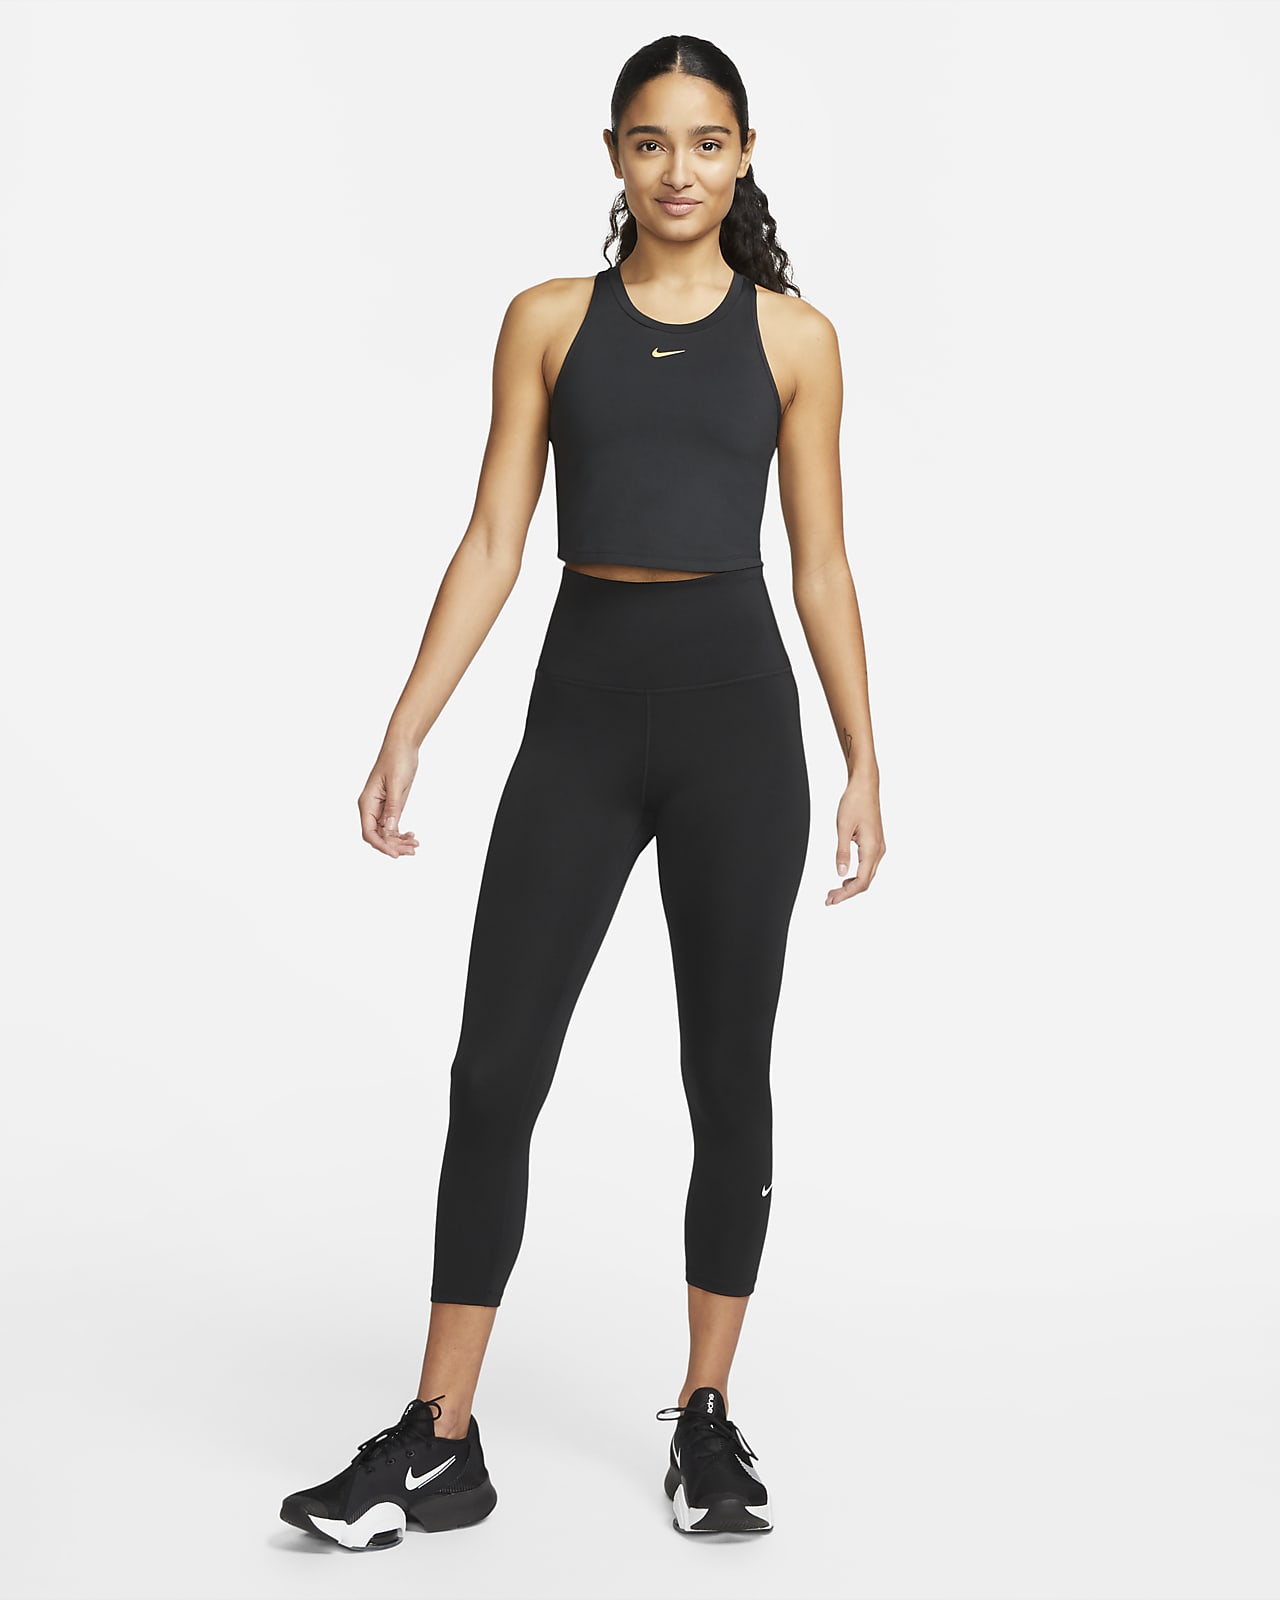 Legging femme Nike One - Pantalons / leggings - Femme - Entretien Physique